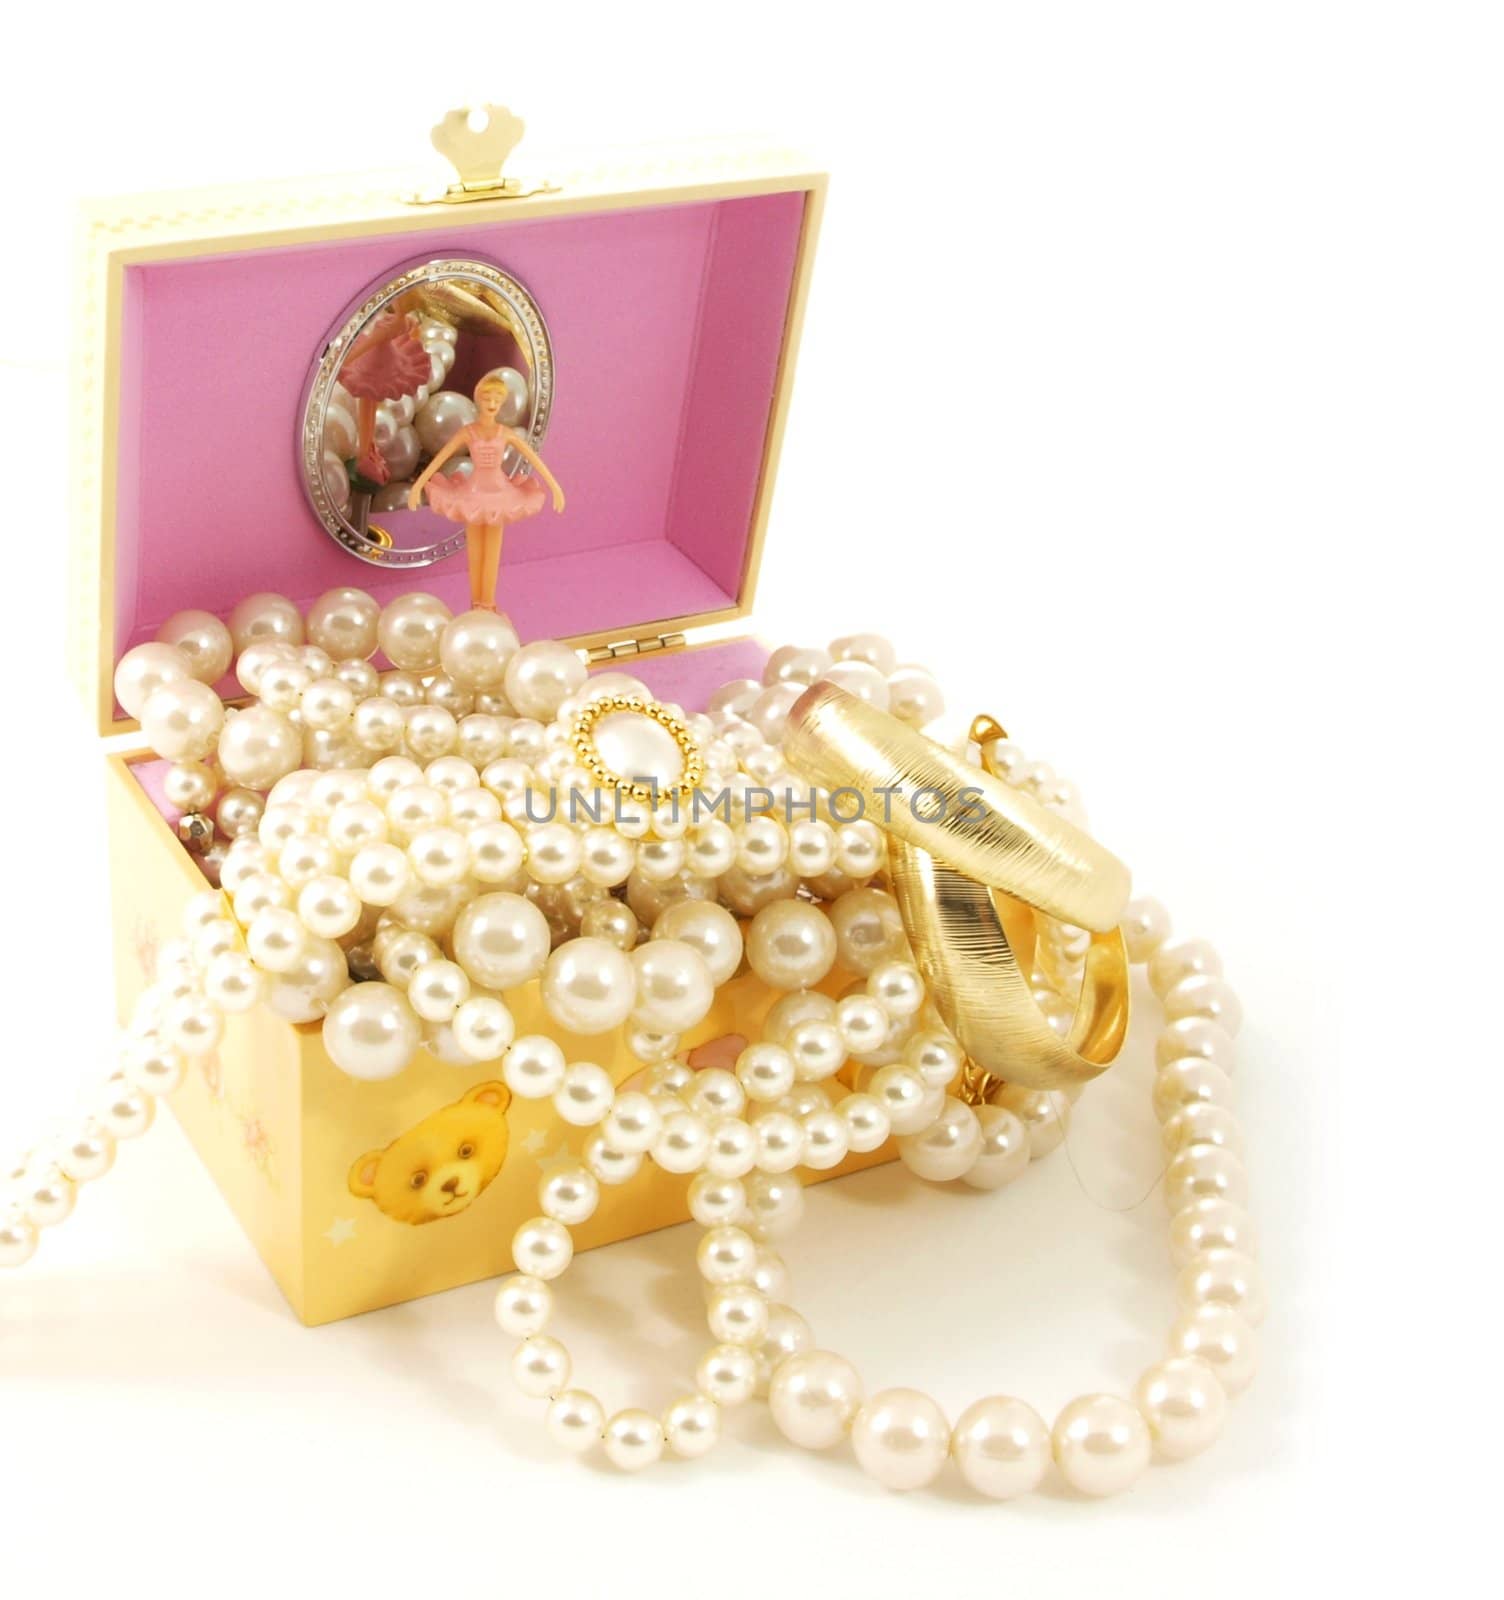 Jewelery box with ballerina, isolated towards white